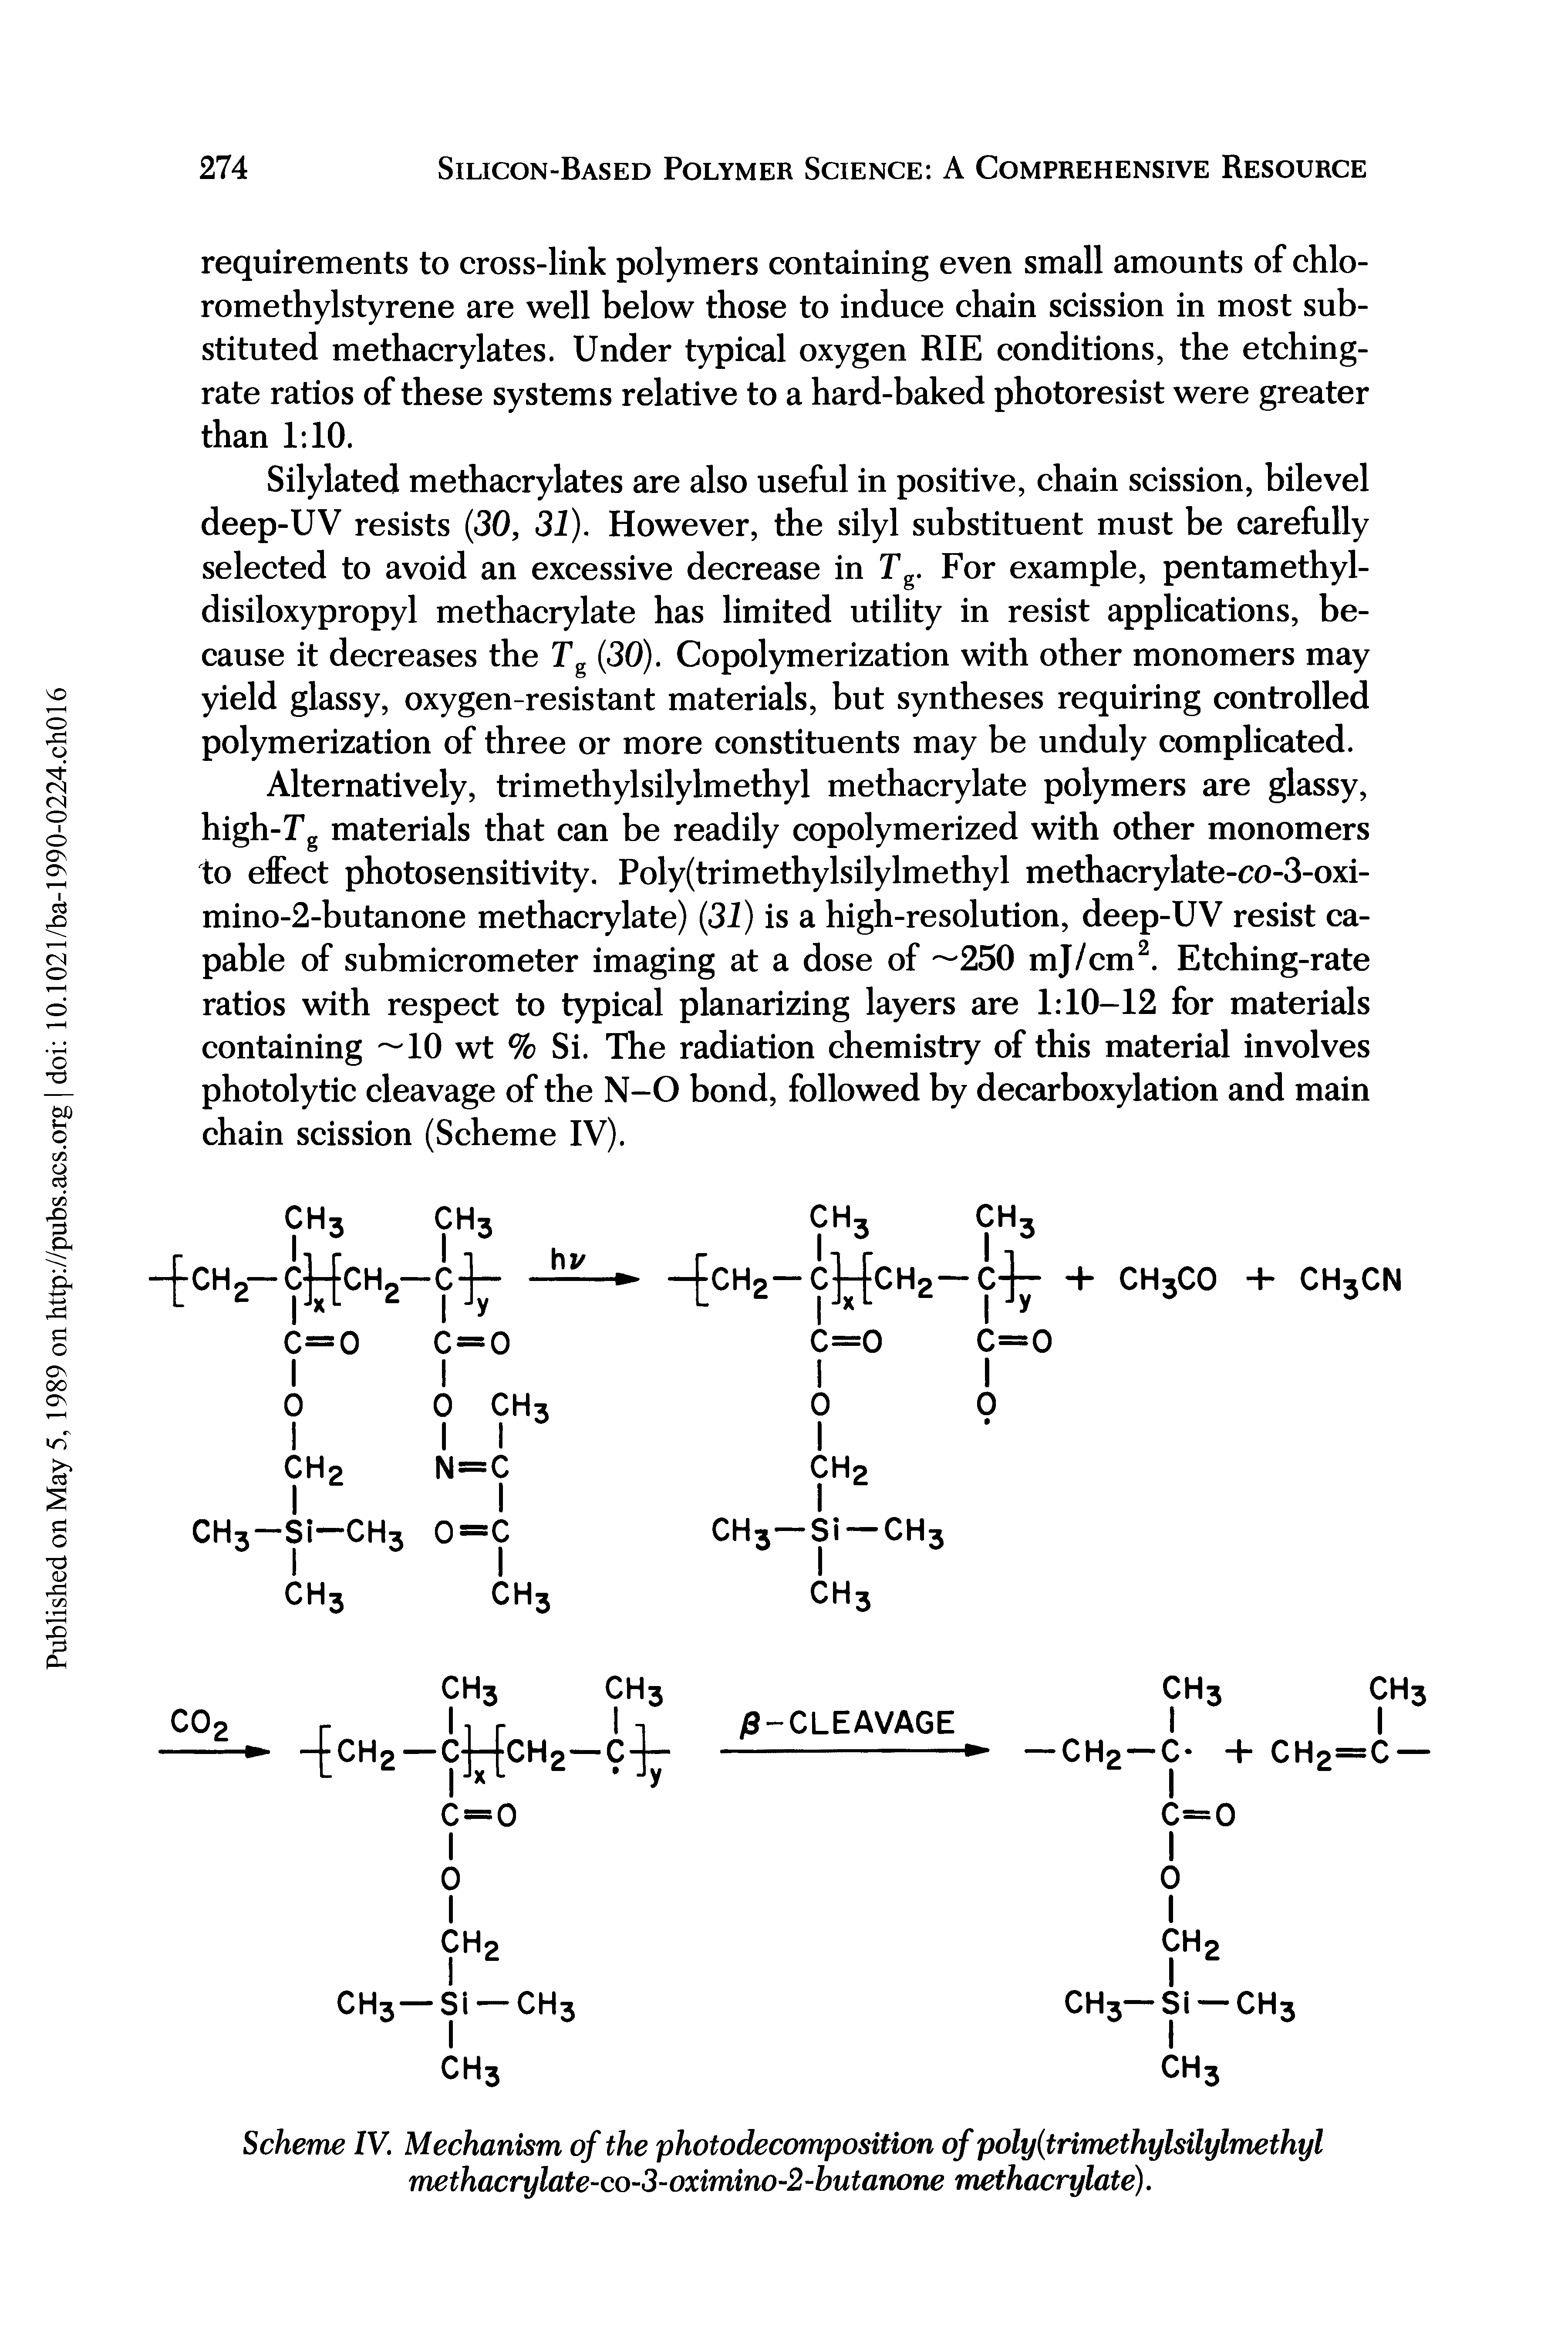 Scheme IV. Mechanism of the photodecomposition of poly(trimethylsilylmethyl methacrylate-co-3-oximino-2-butanone methacrylate).